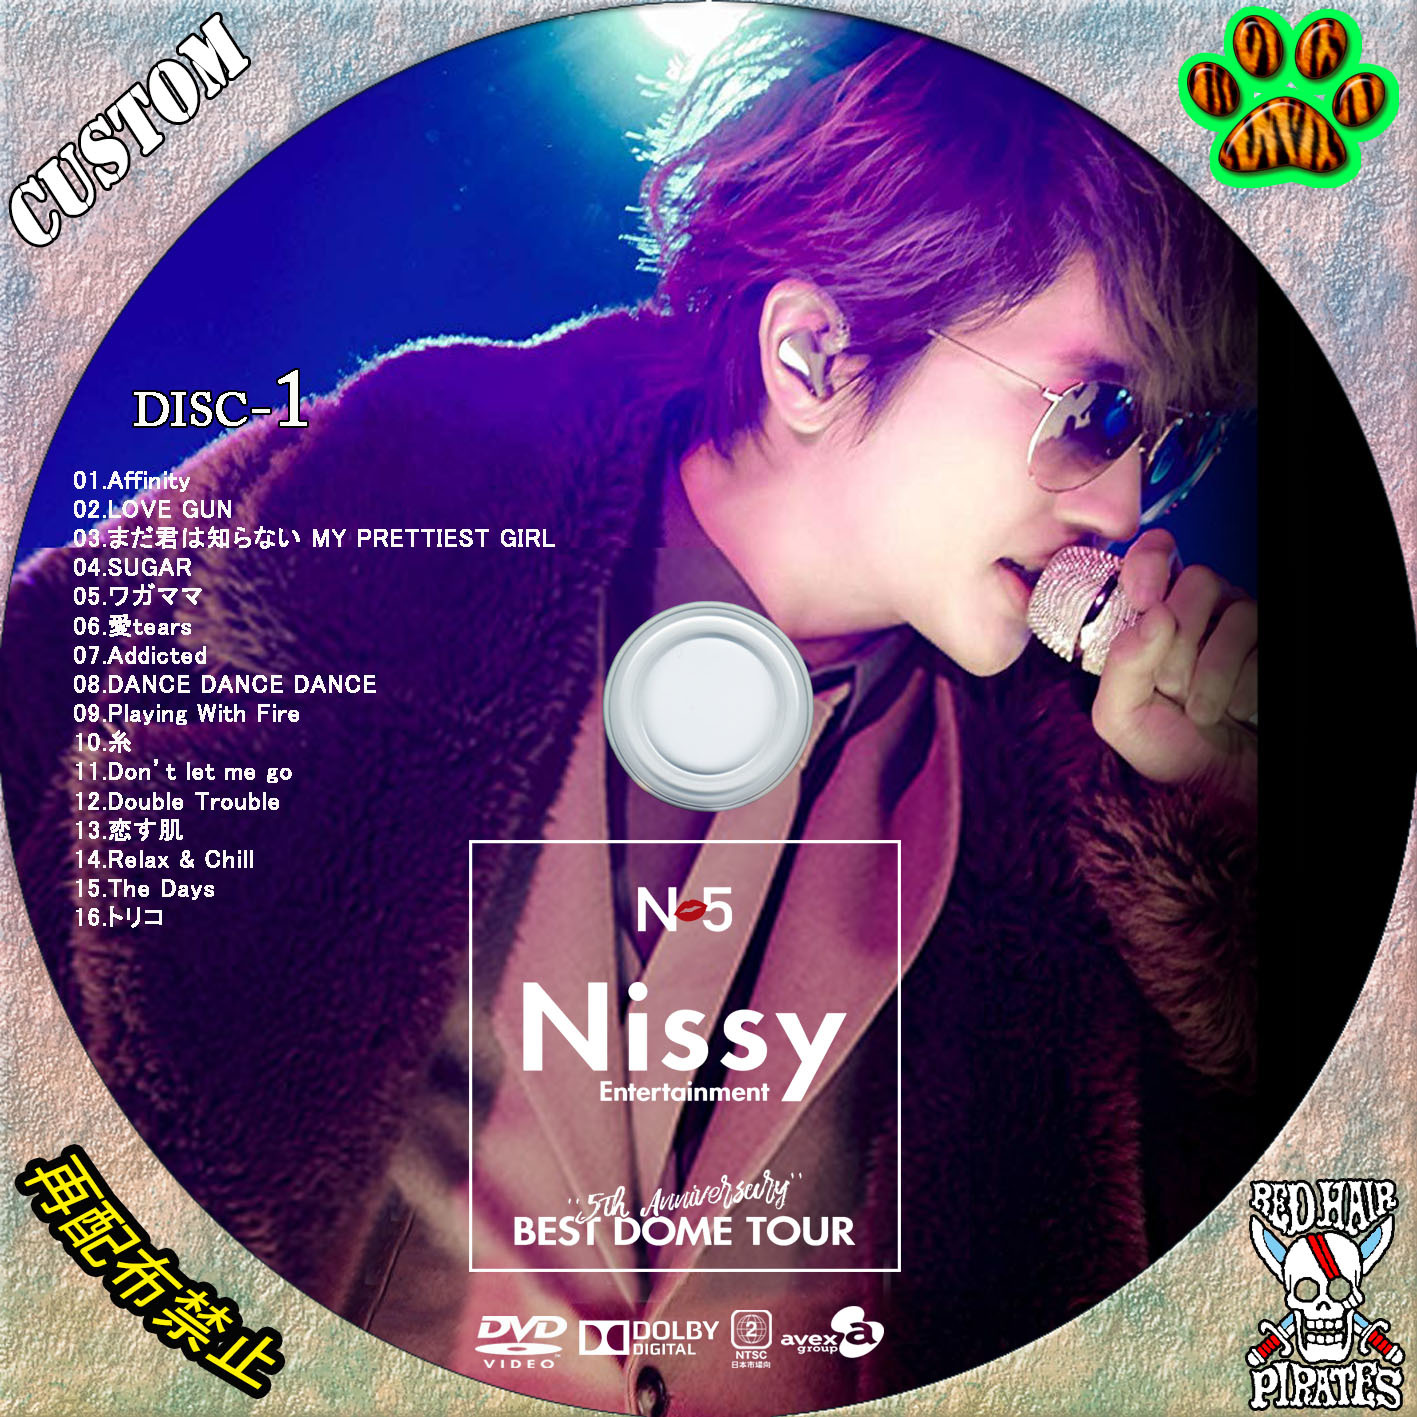 nissy entertainment 5th anniversary best - blog.knak.jp